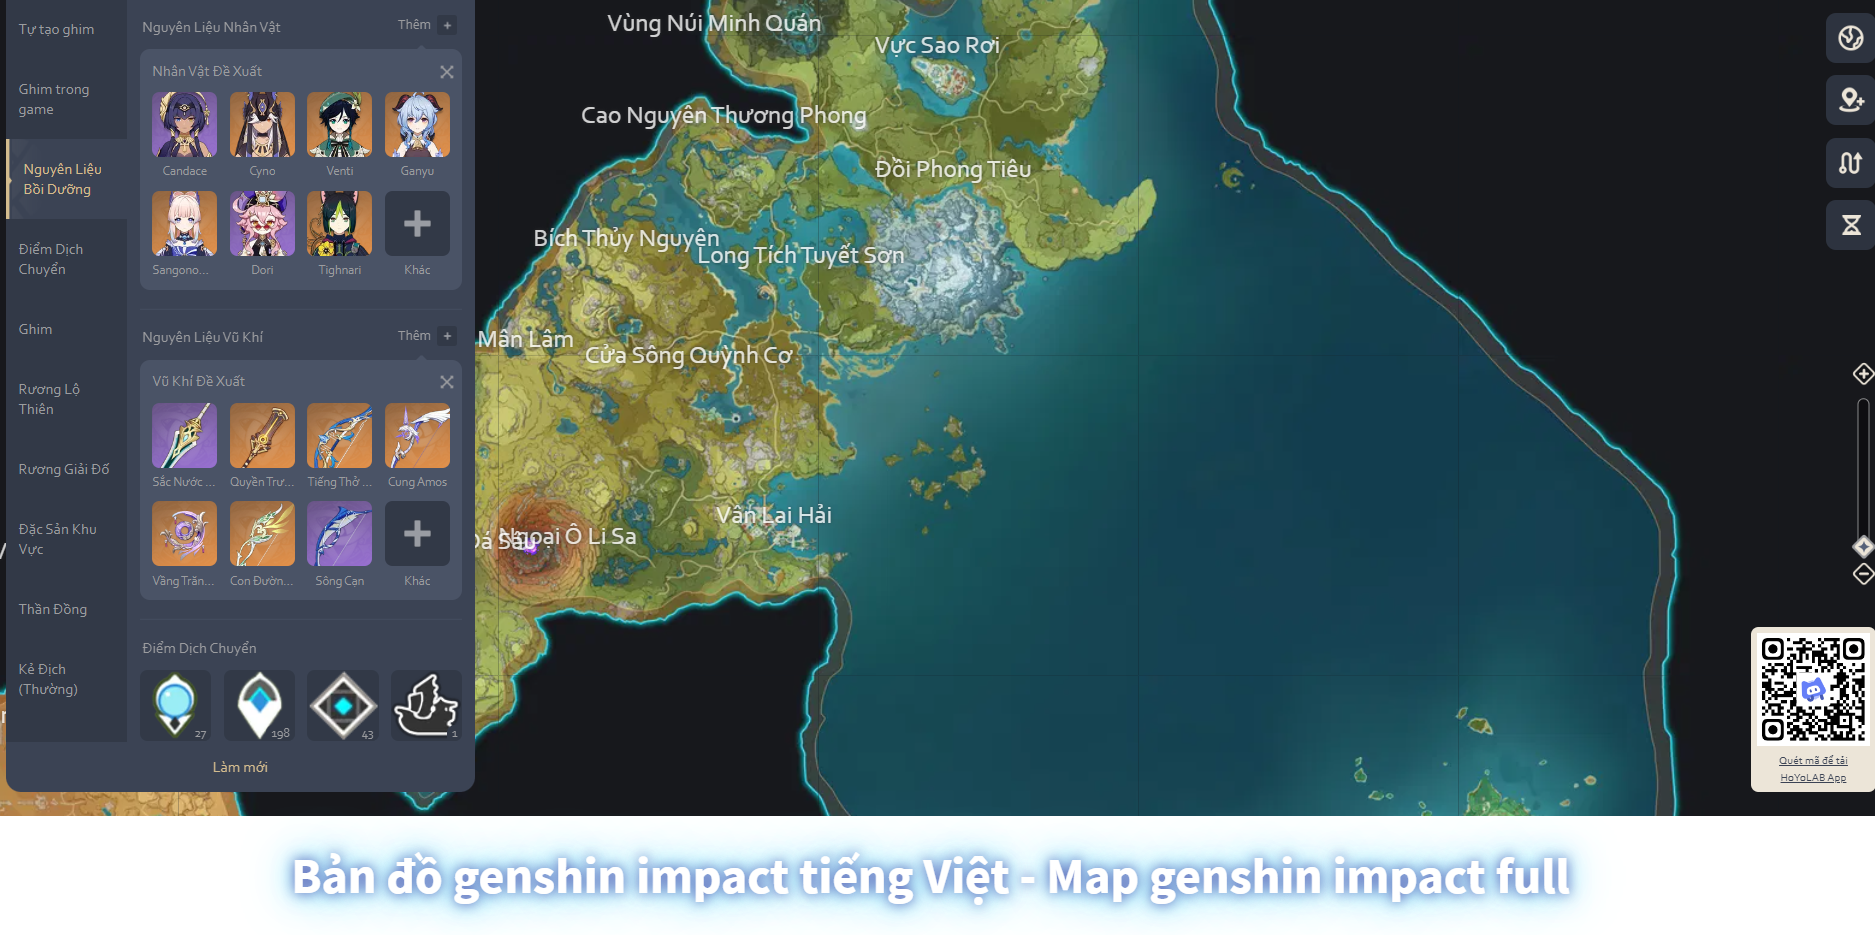 Ban Do Genshin Map 